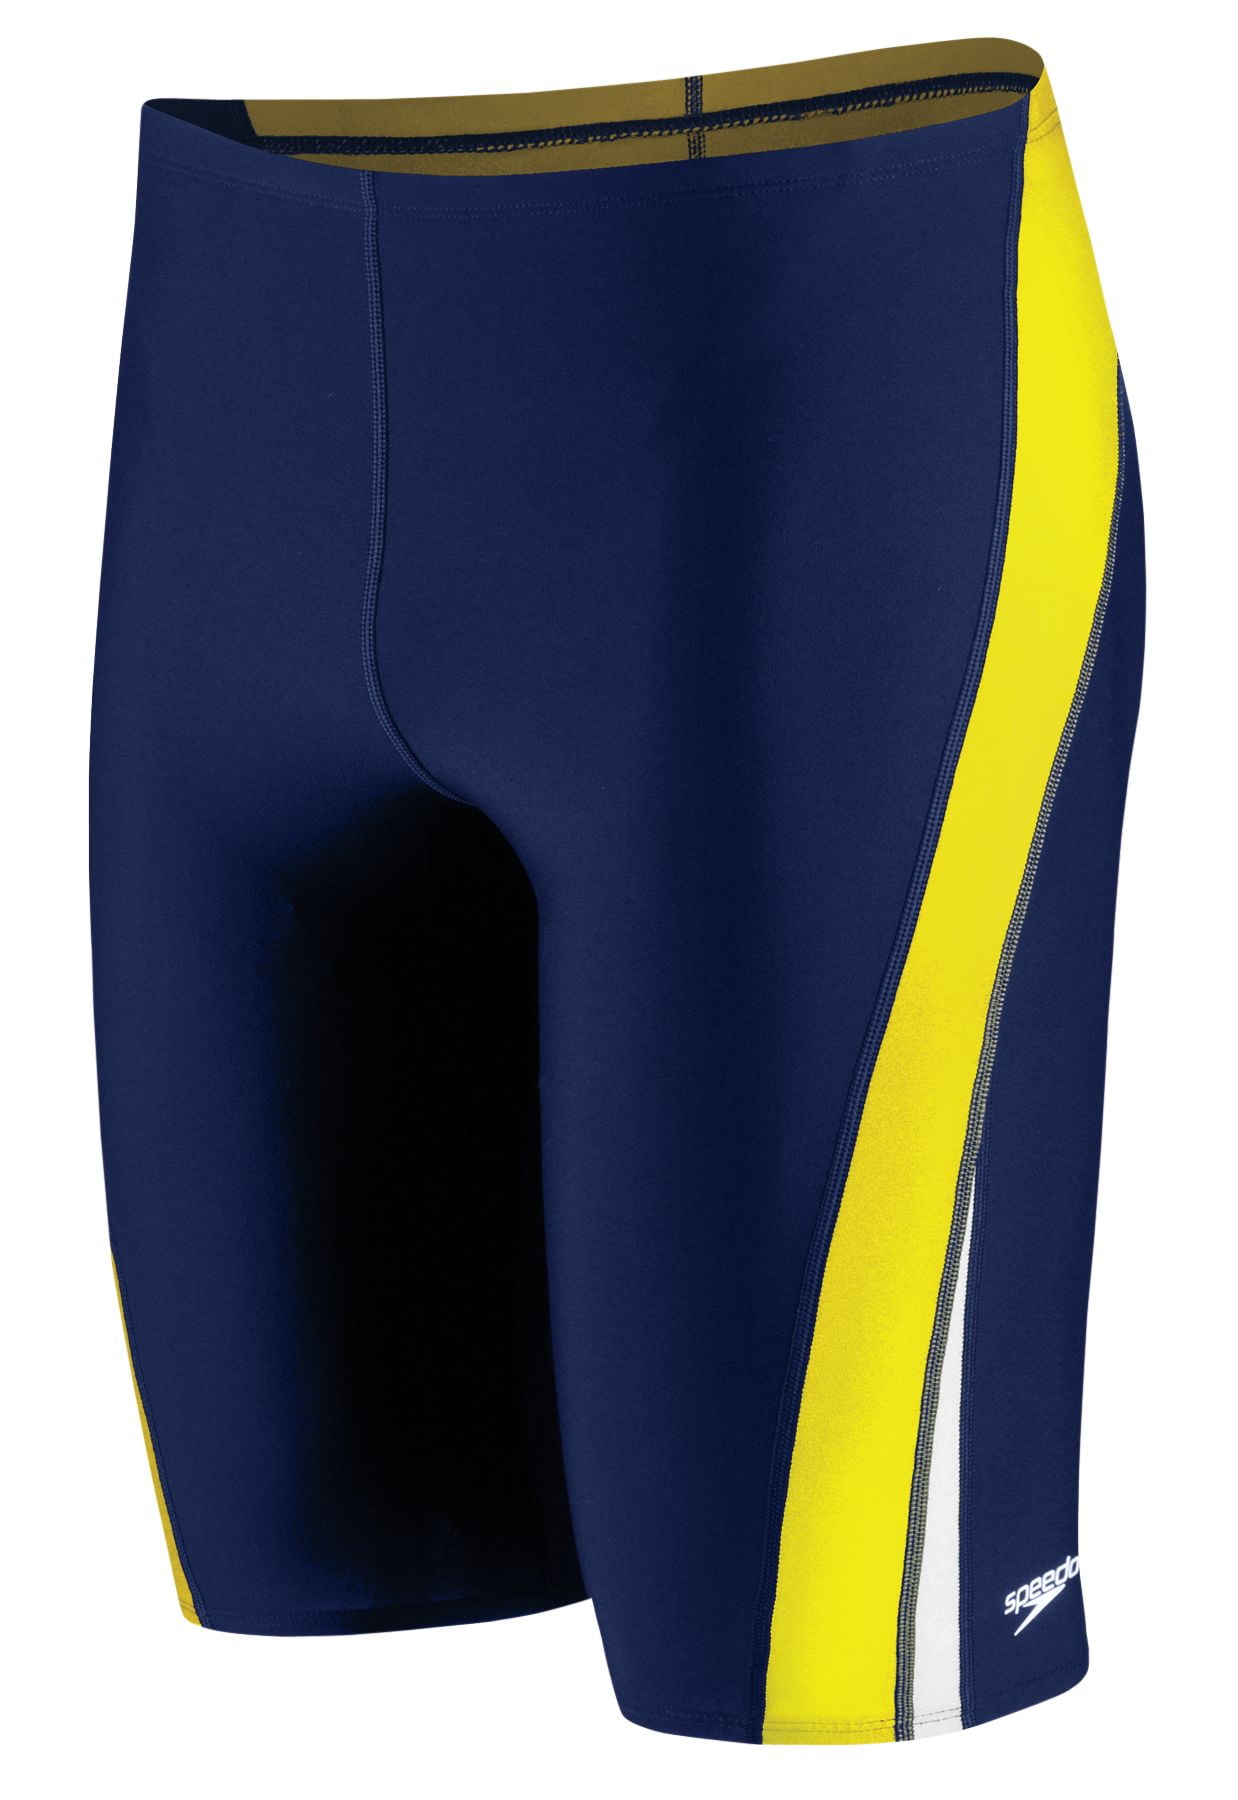 Speedo Men's Swimsuit Jammer Endurance+ Splice Team Colors Navy/Gold ...